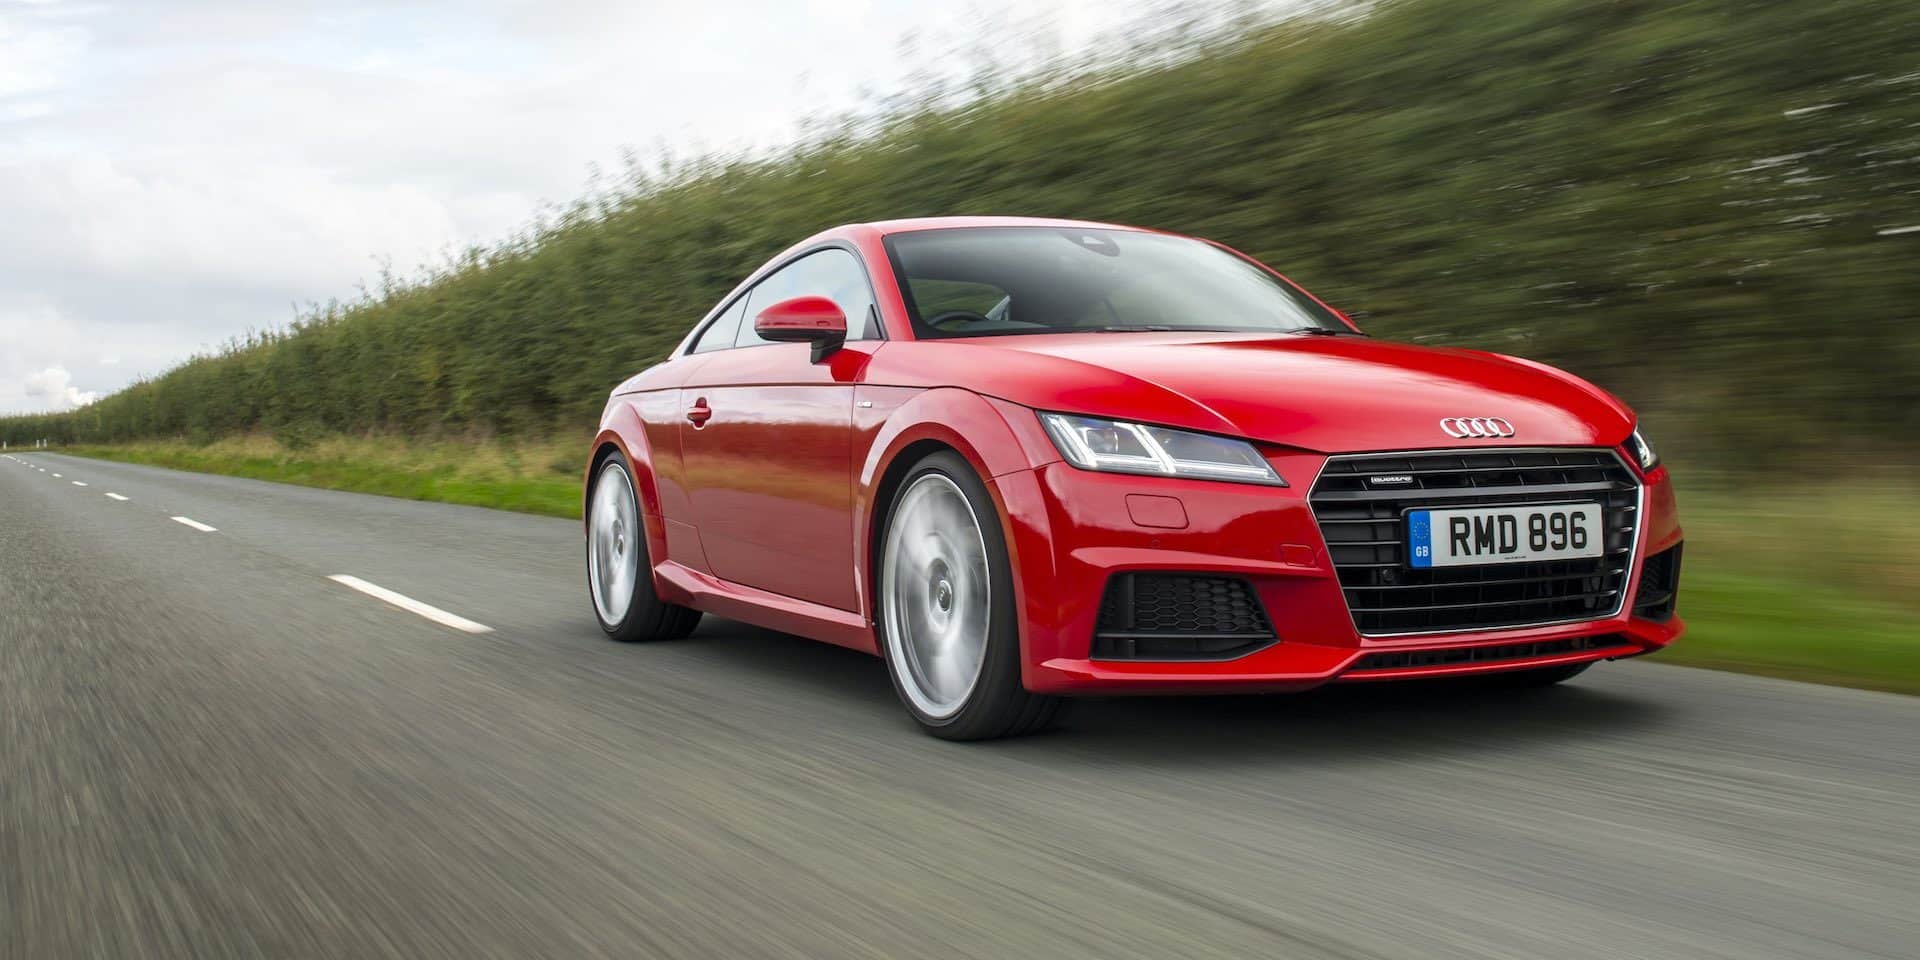 2014 Audi TT review | The Car Expert